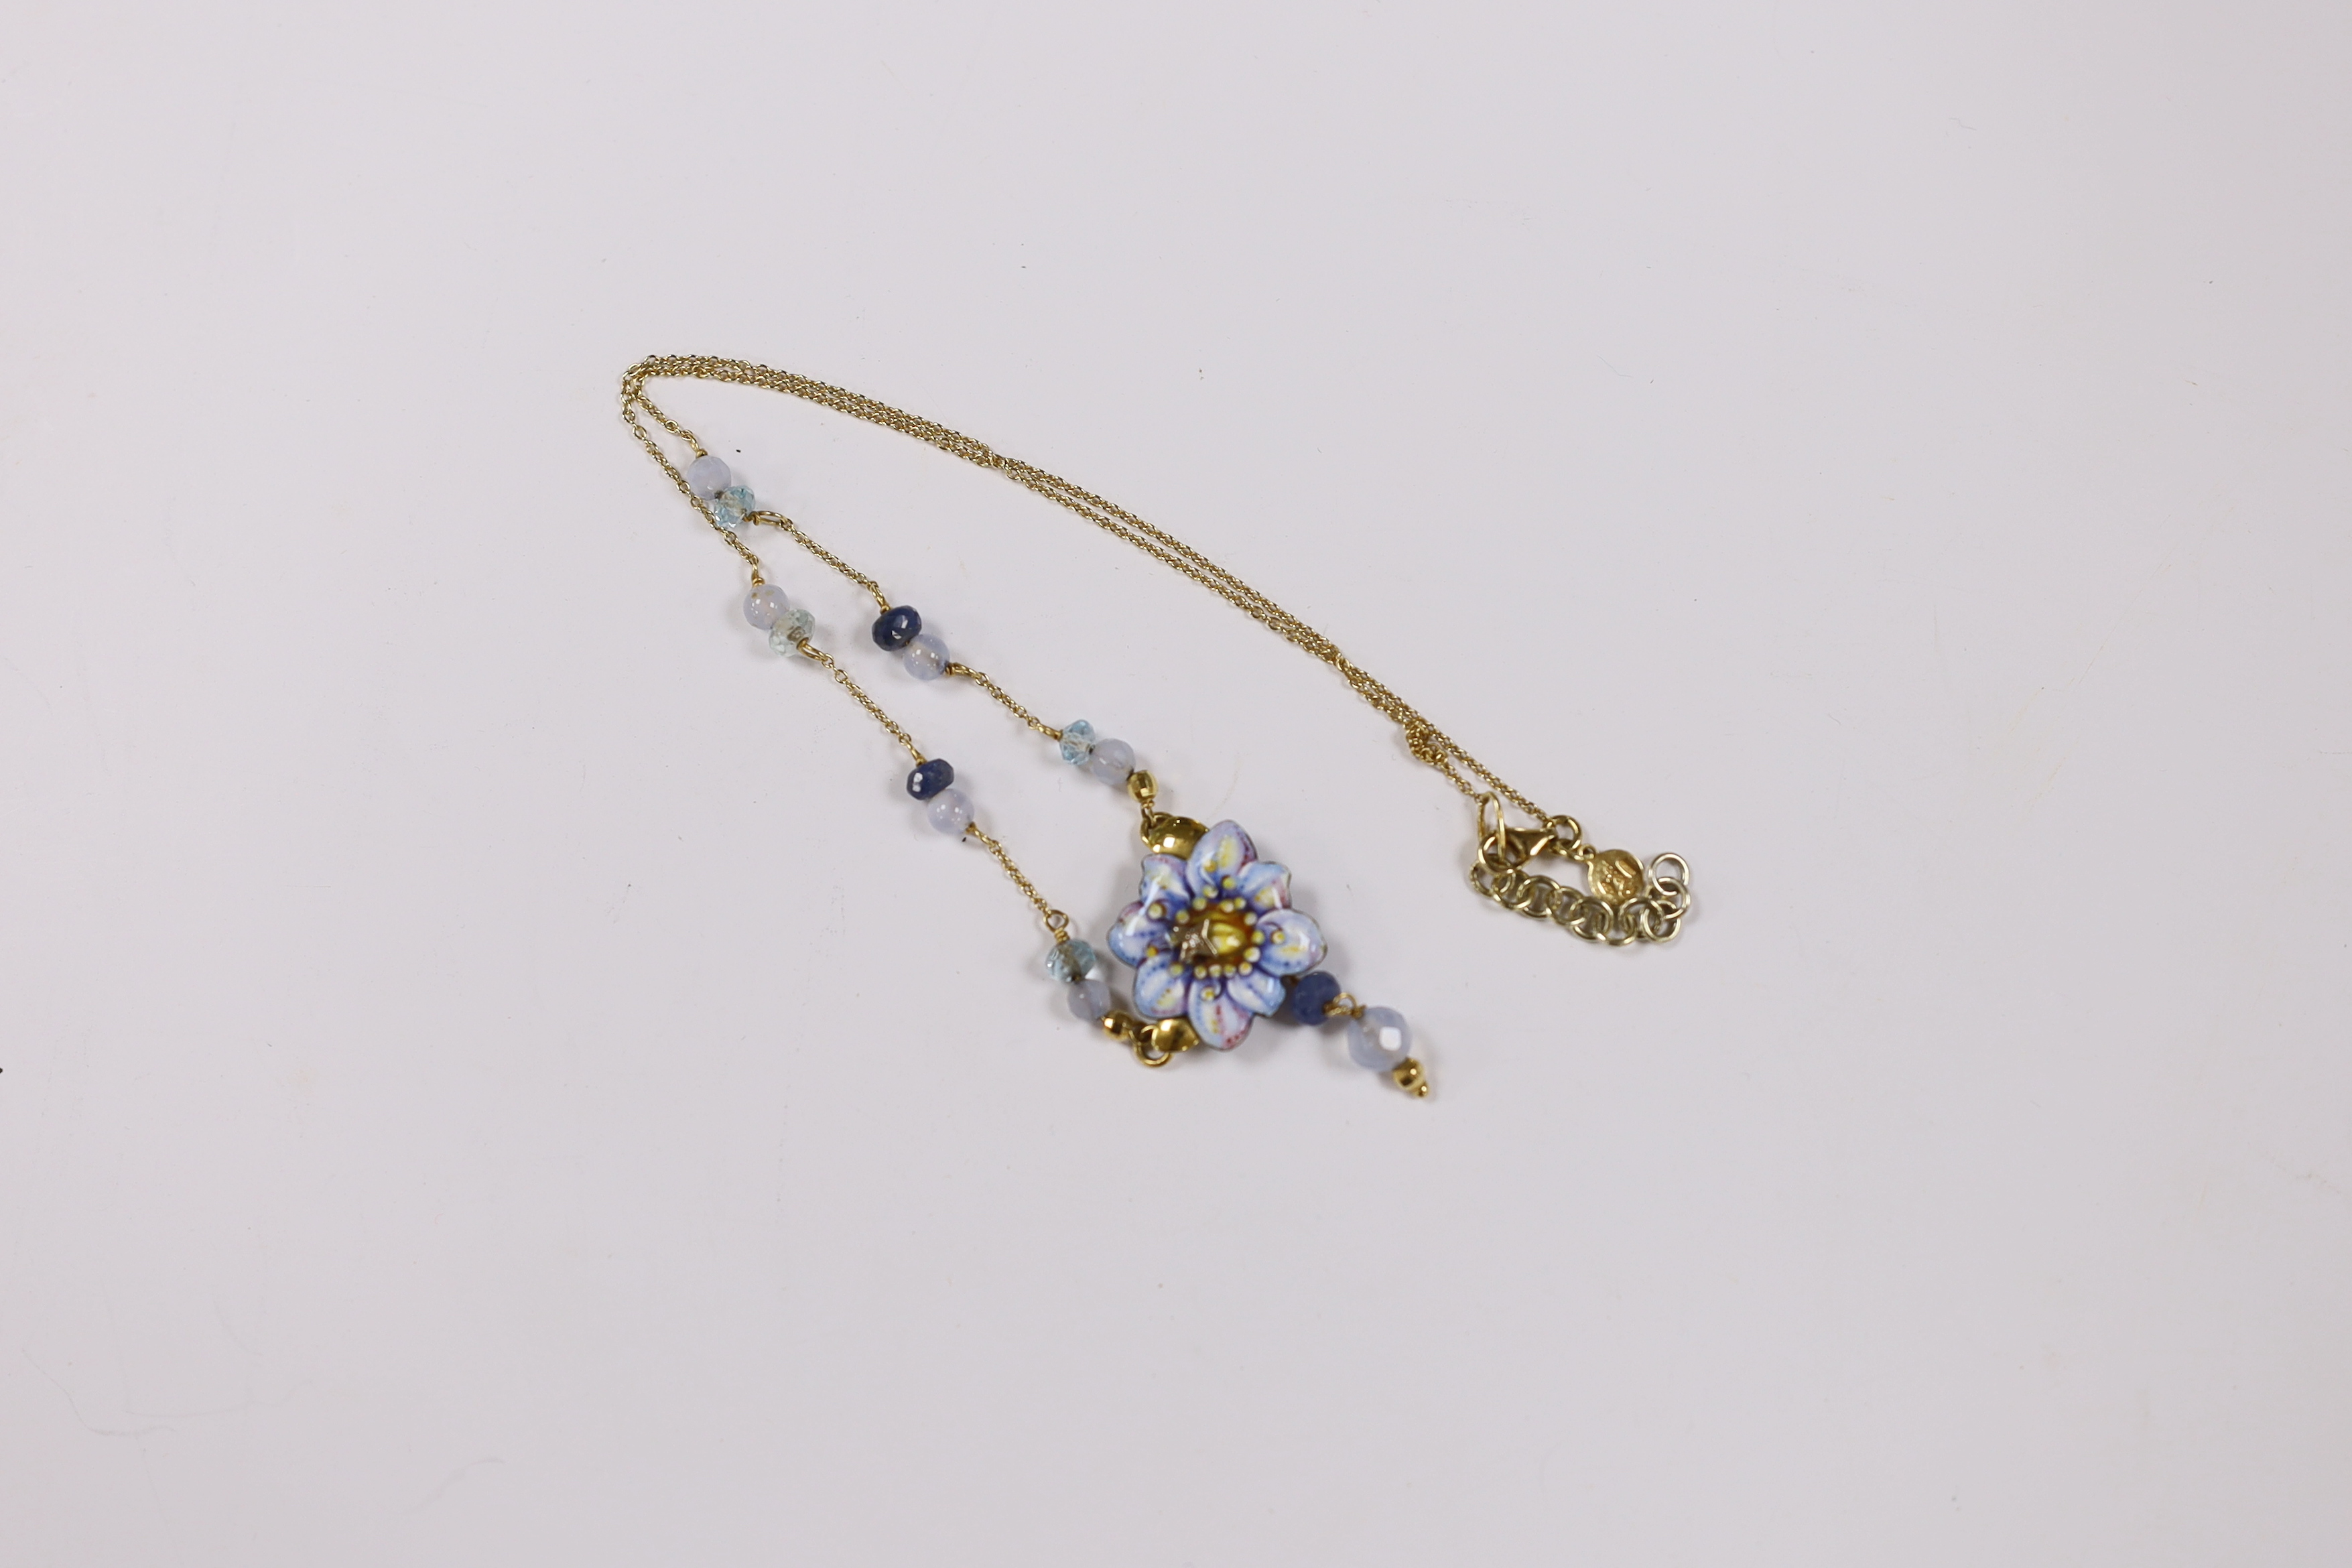 A 20th century Italian 750, enamel, diamond and gem bead set drop pendant necklace, 42cm, gross weight 8.6 grams.